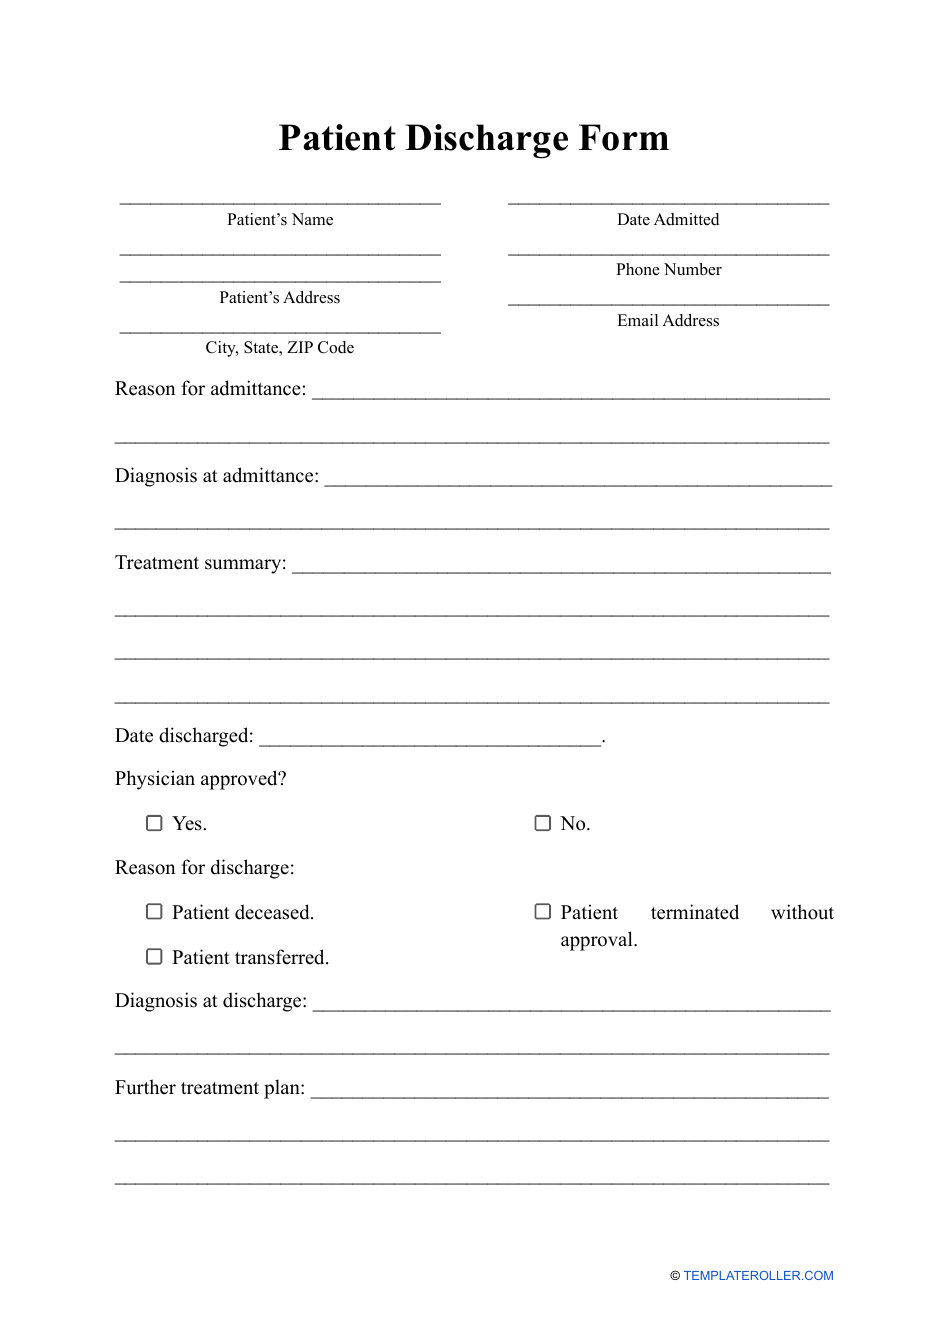 Patient Discharge Form Download Printable Pdf Templateroller